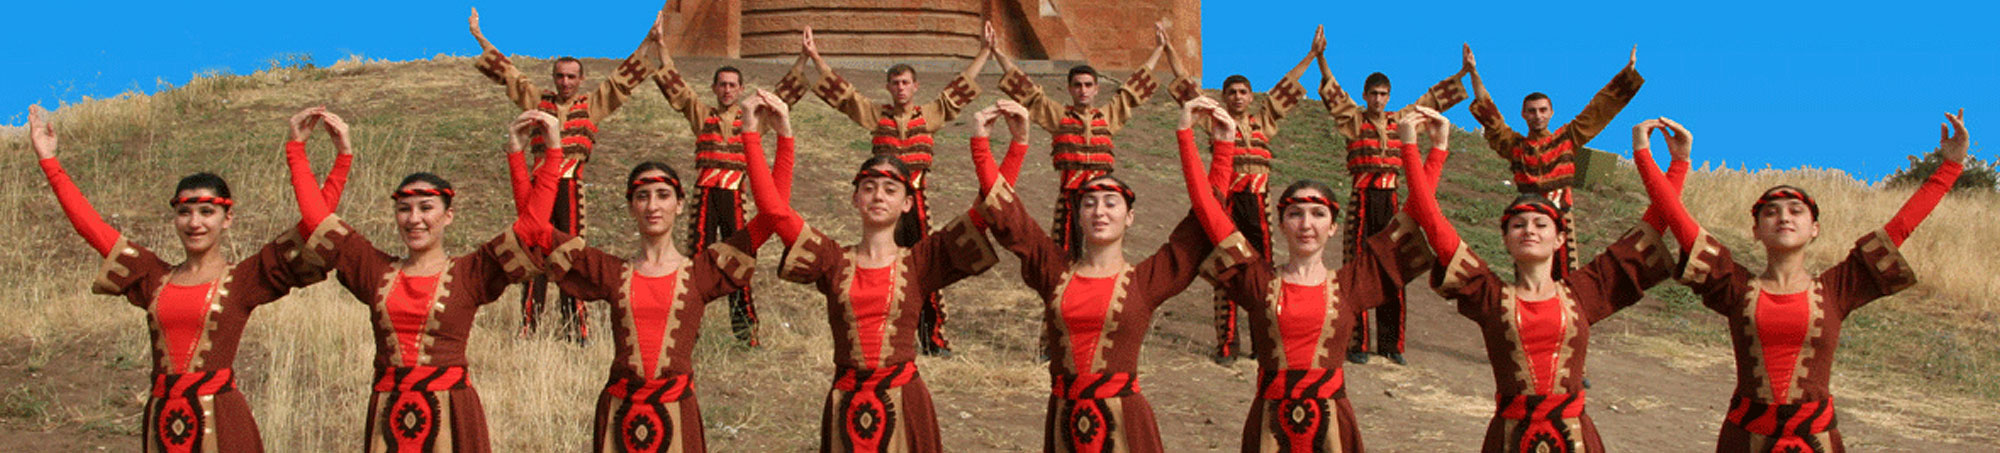 People of Artsakh: language, culture, traditions. Artsakh (Nagorno Karabakh)